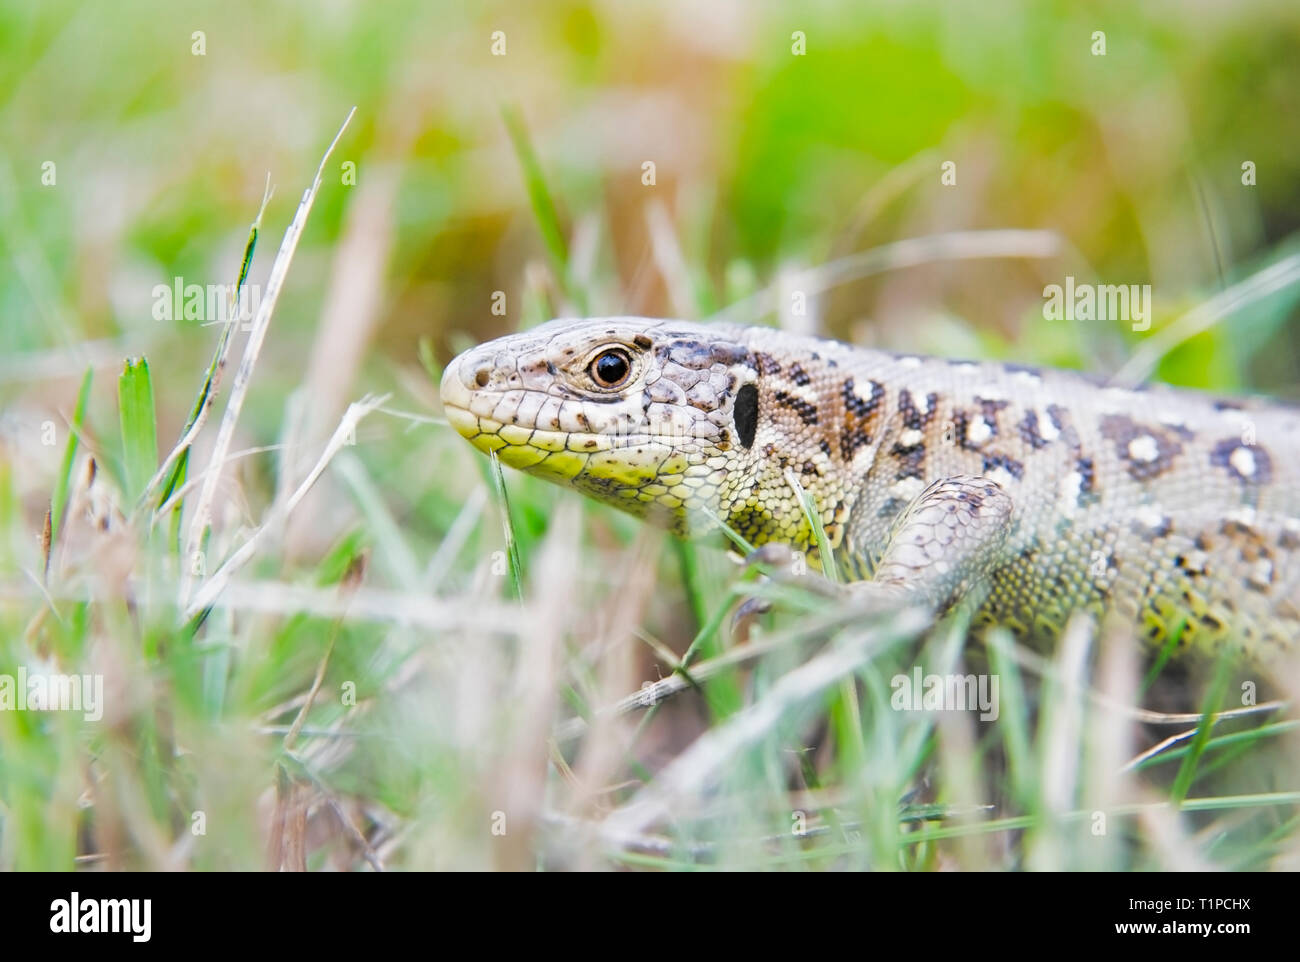 A garden lizard hides in the green grass Stock Photo